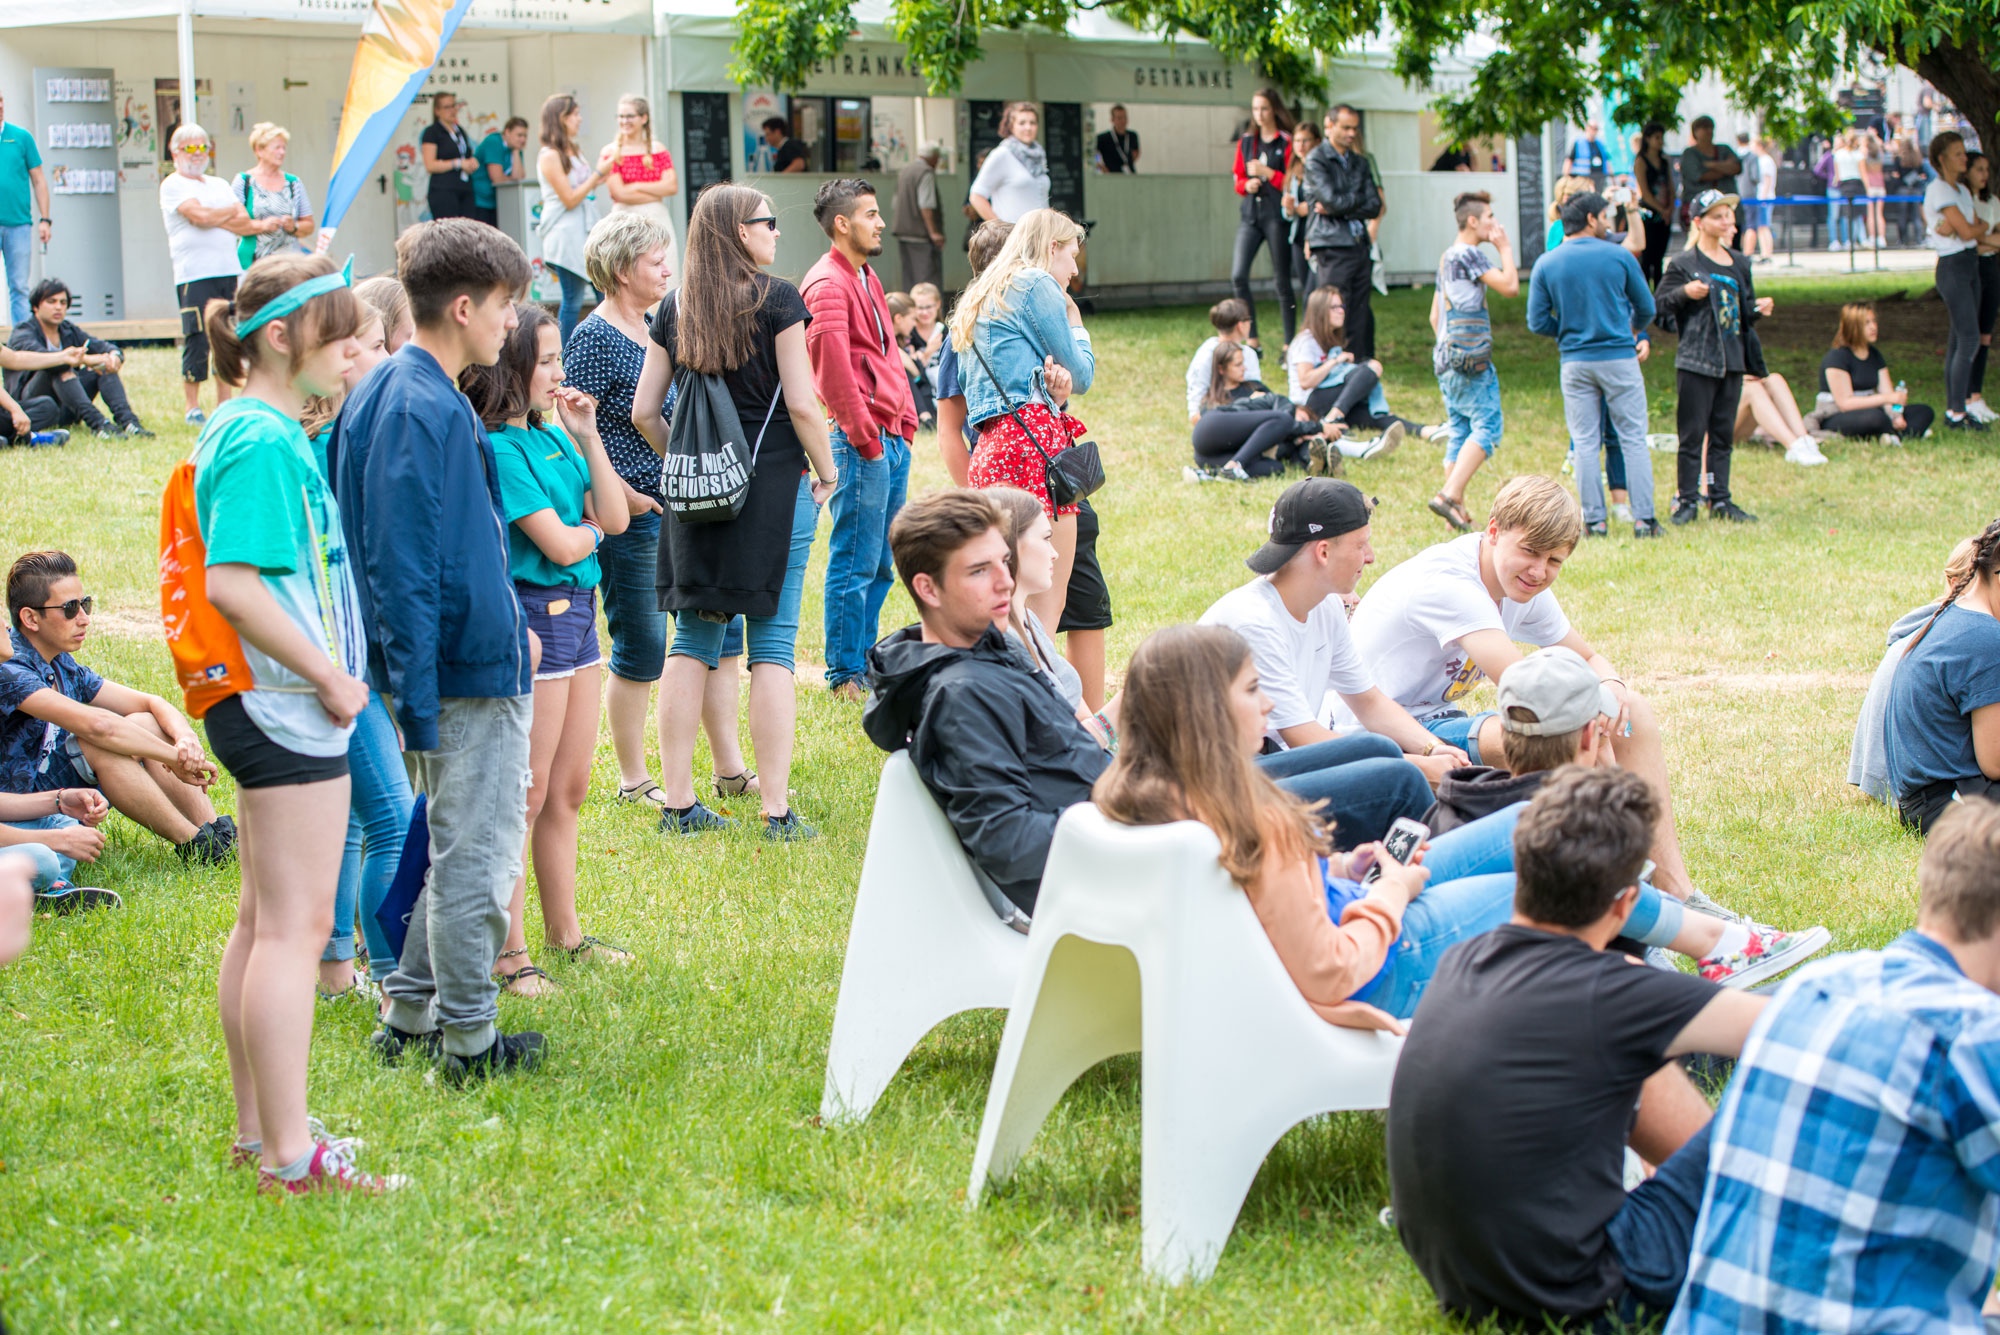 Summerbreak 2017 - Das Schülerfestival in Chemnitz